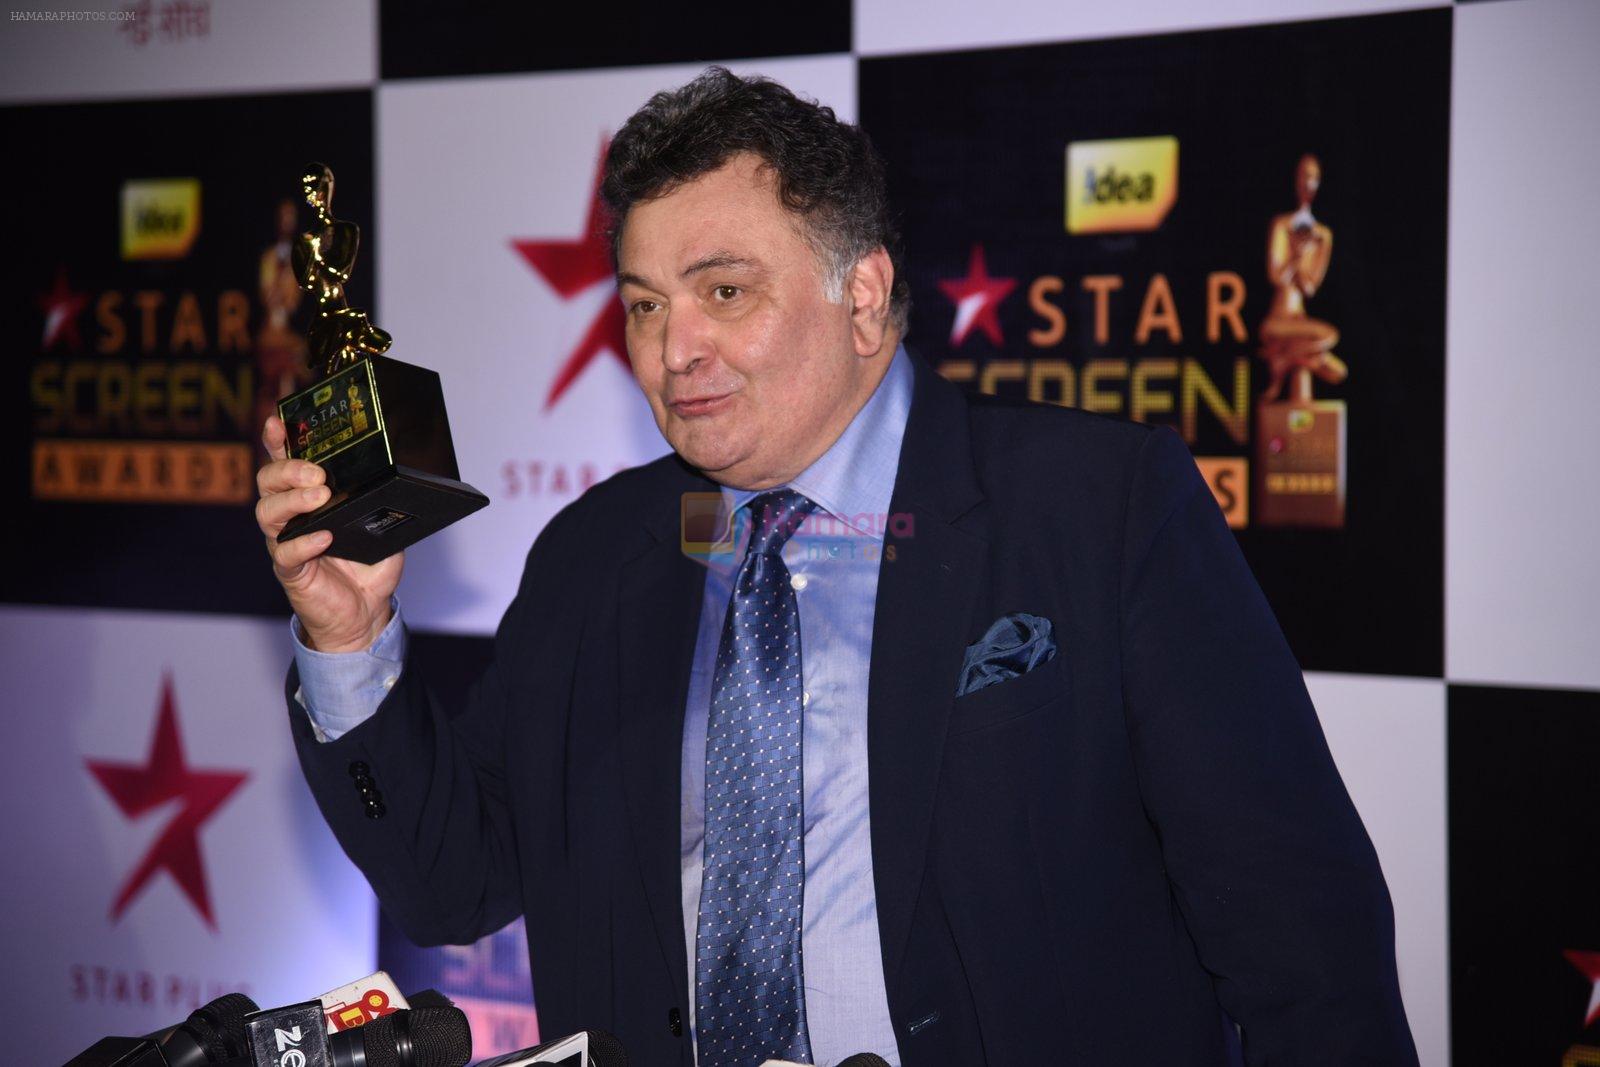 Rishi Kapoor at 22nd Star Screen Awards 2016 on 4th Dec 2016